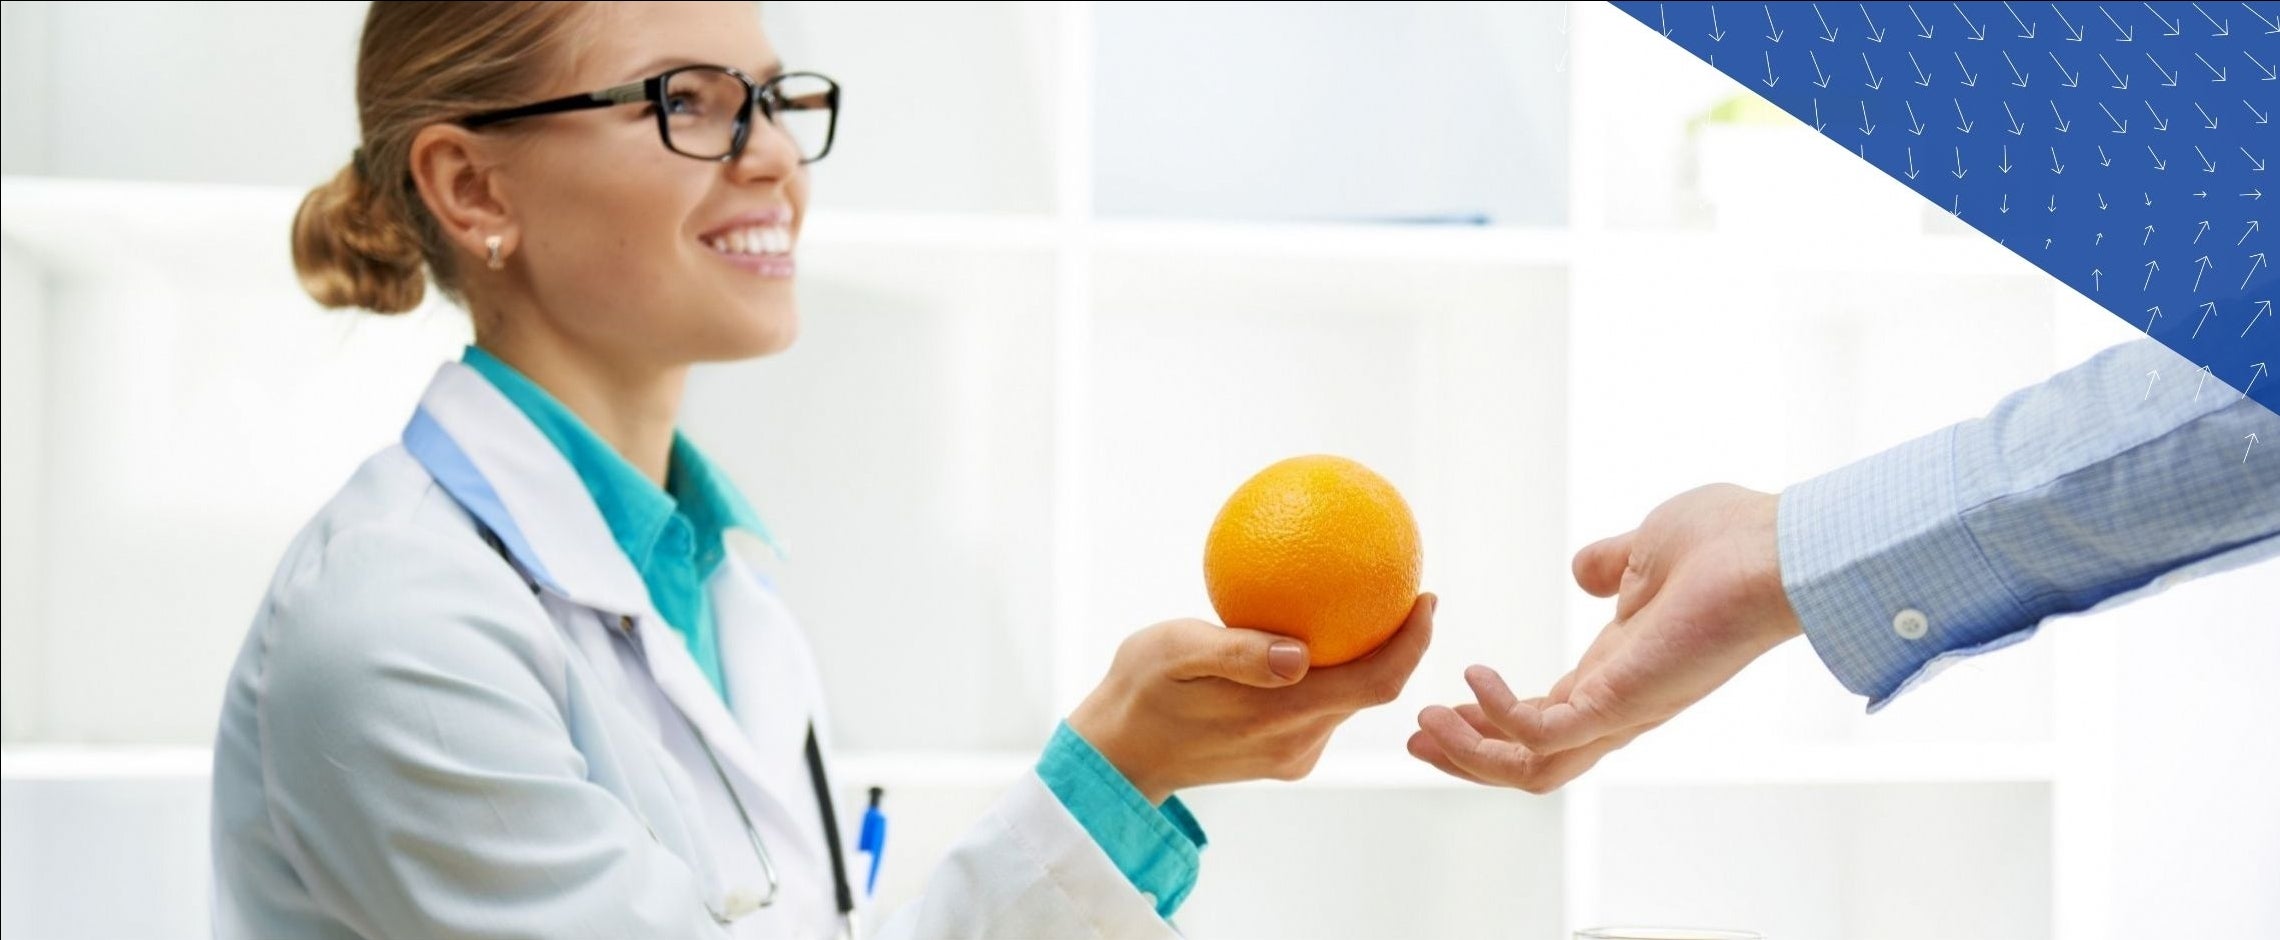 clinician holding orange